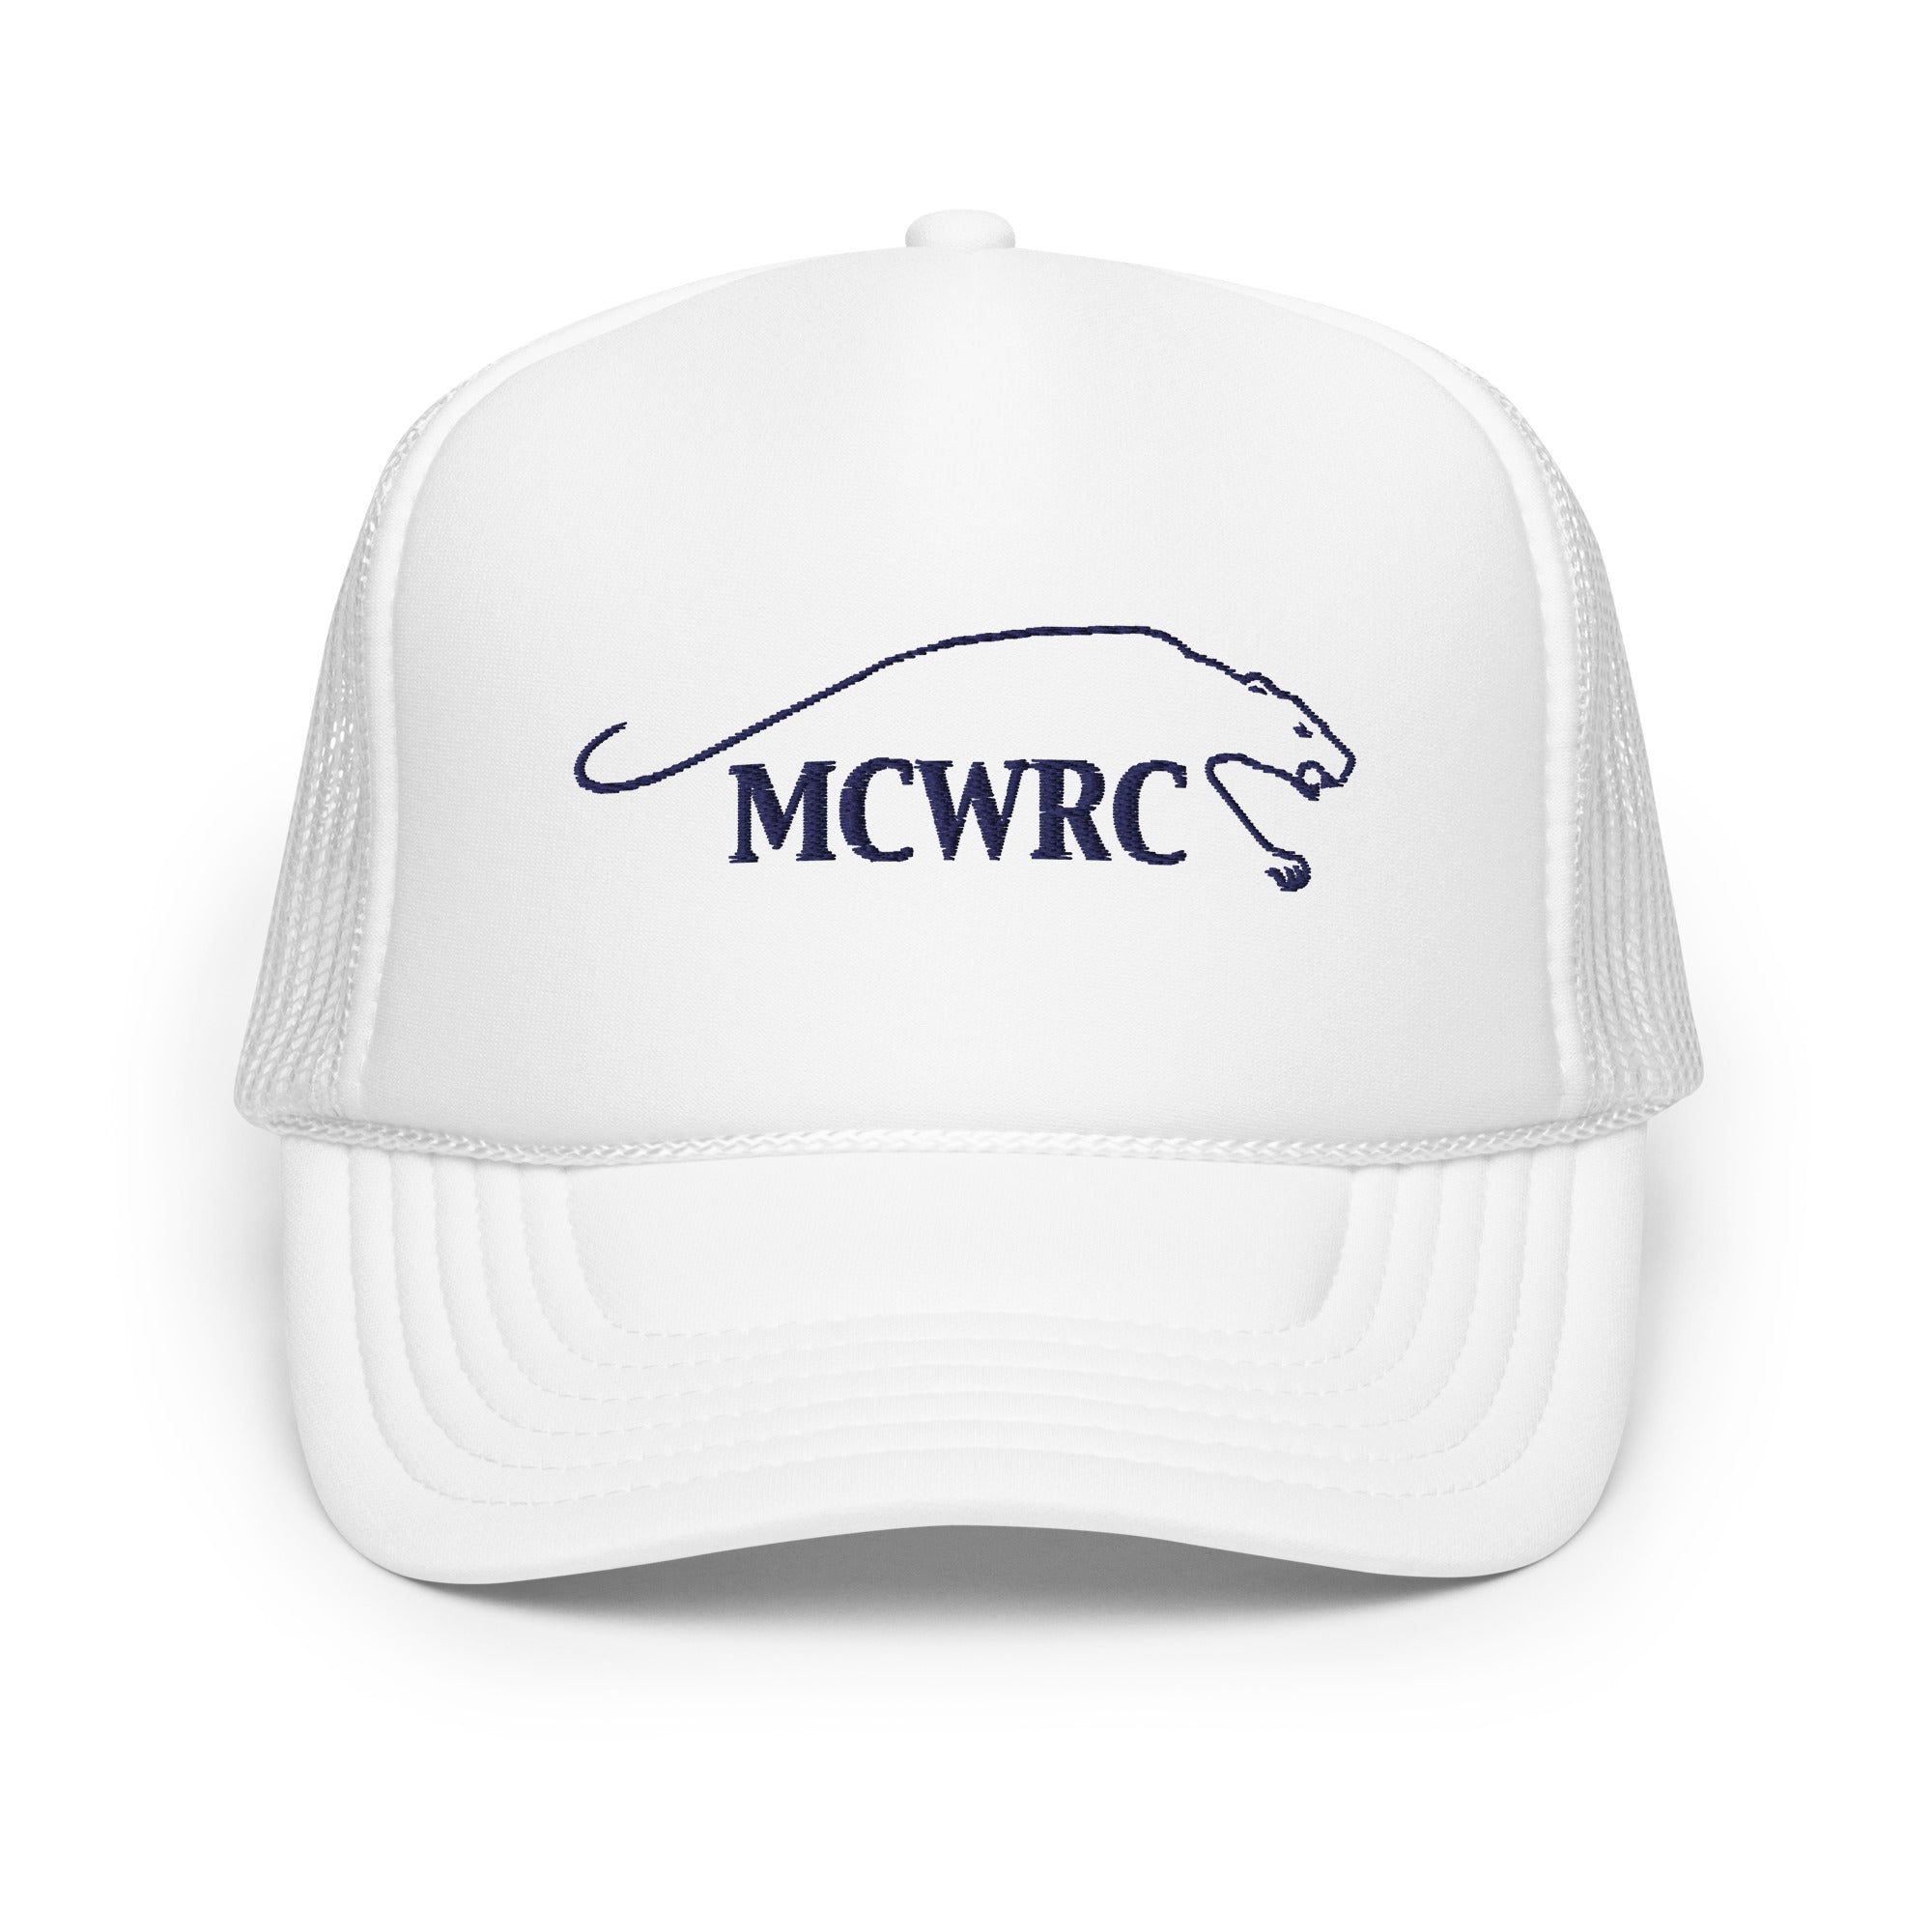 Rugby Imports MCWRC Foam Trucker Hat